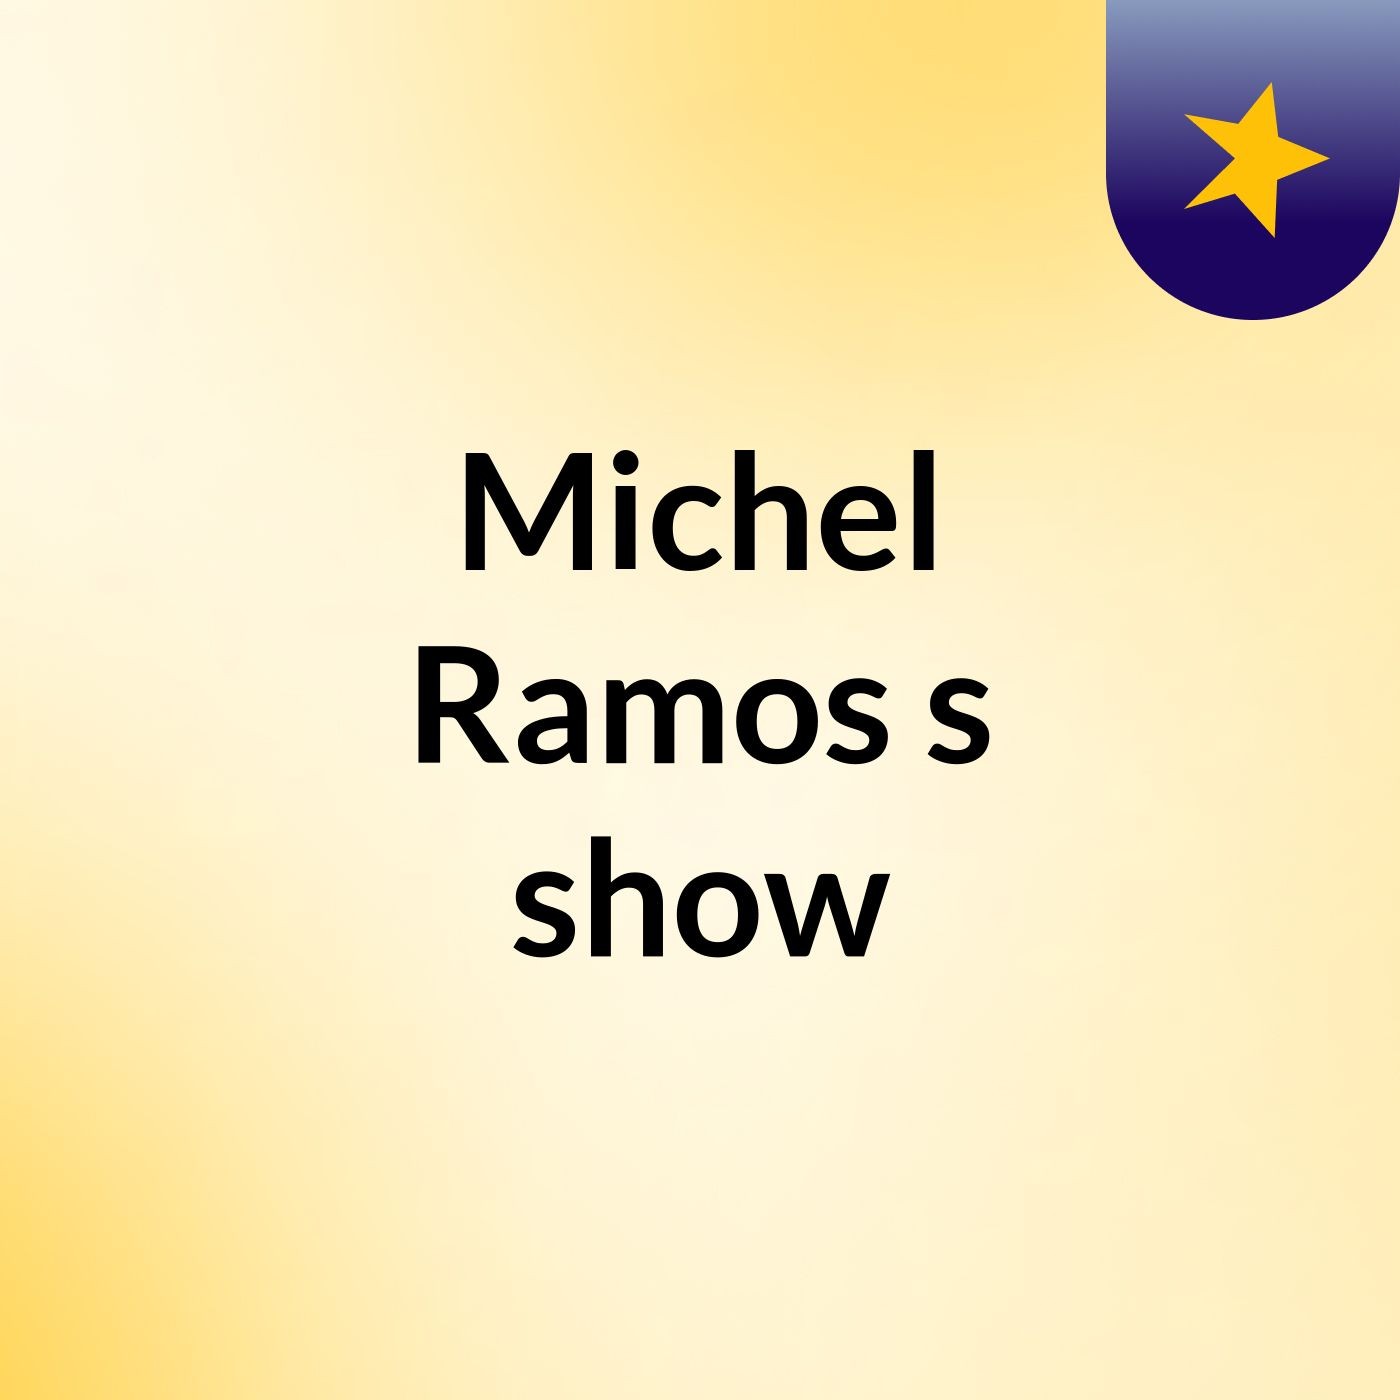 Michel Ramos's show